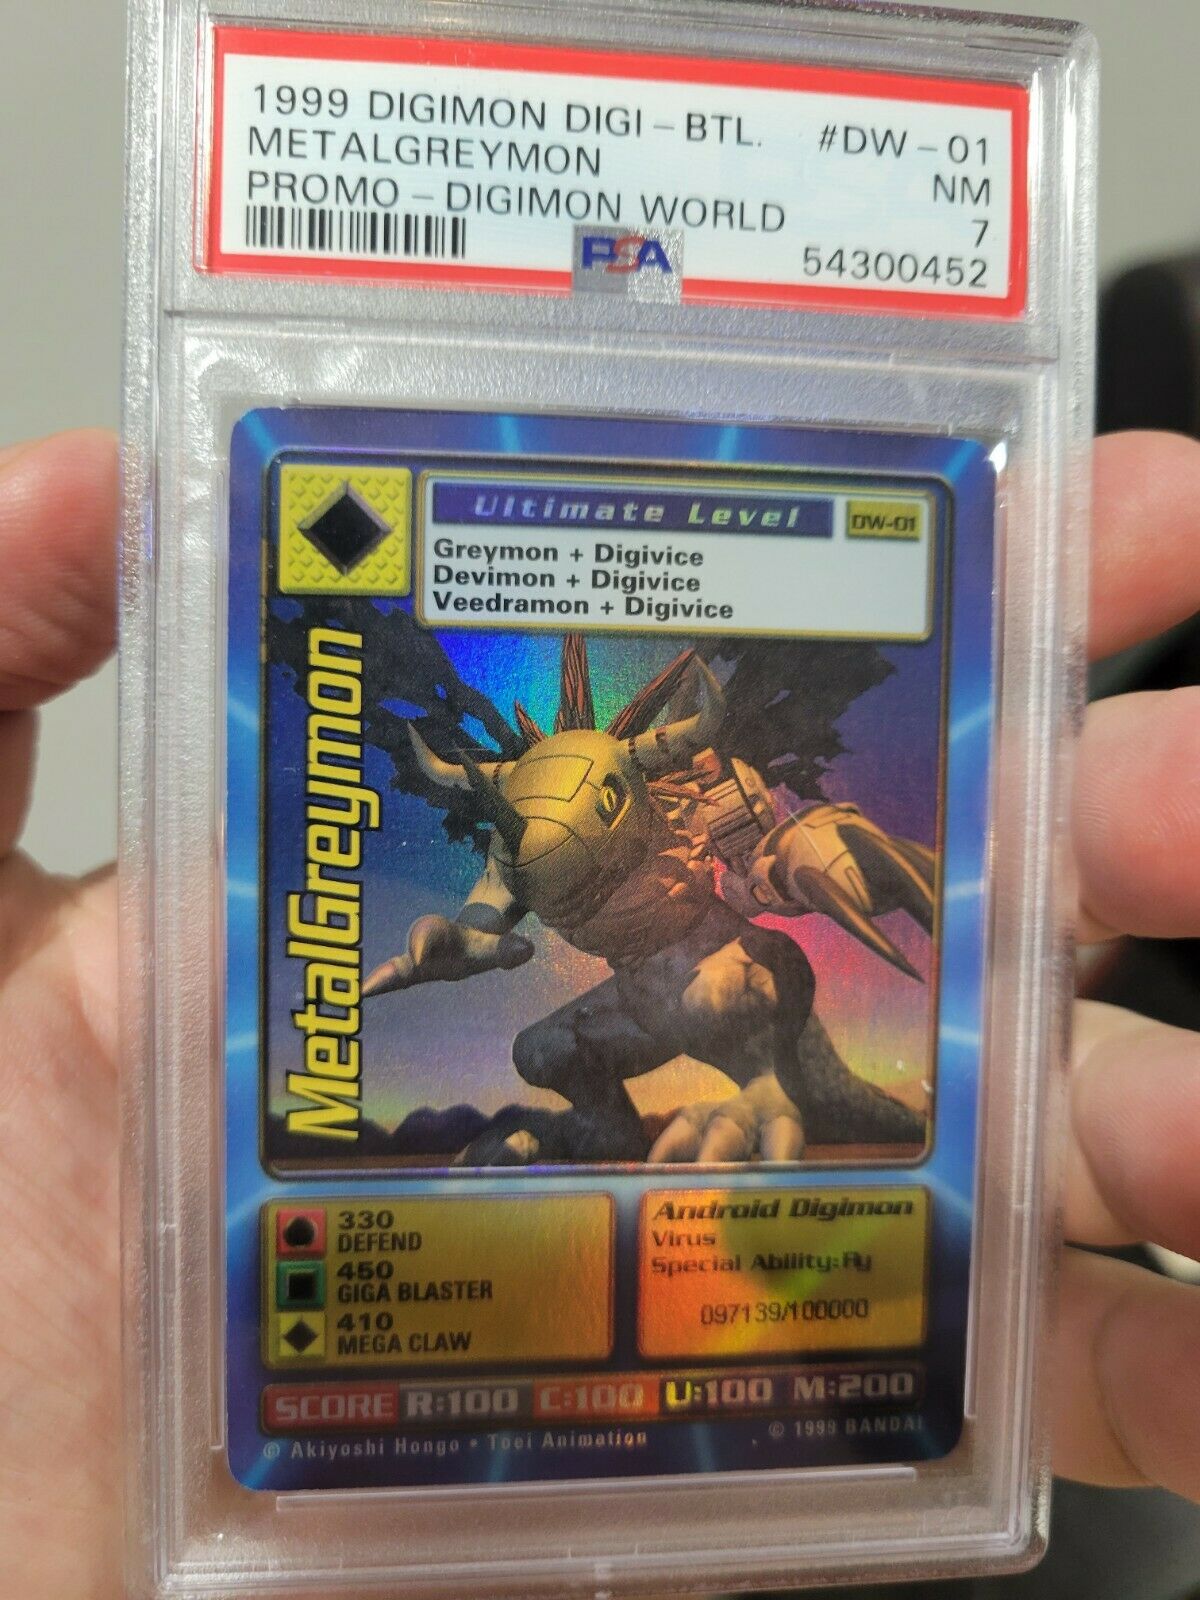 Digimon World PlayStation Promo DW-01 MetalGreymon - number 097139 / 100,000